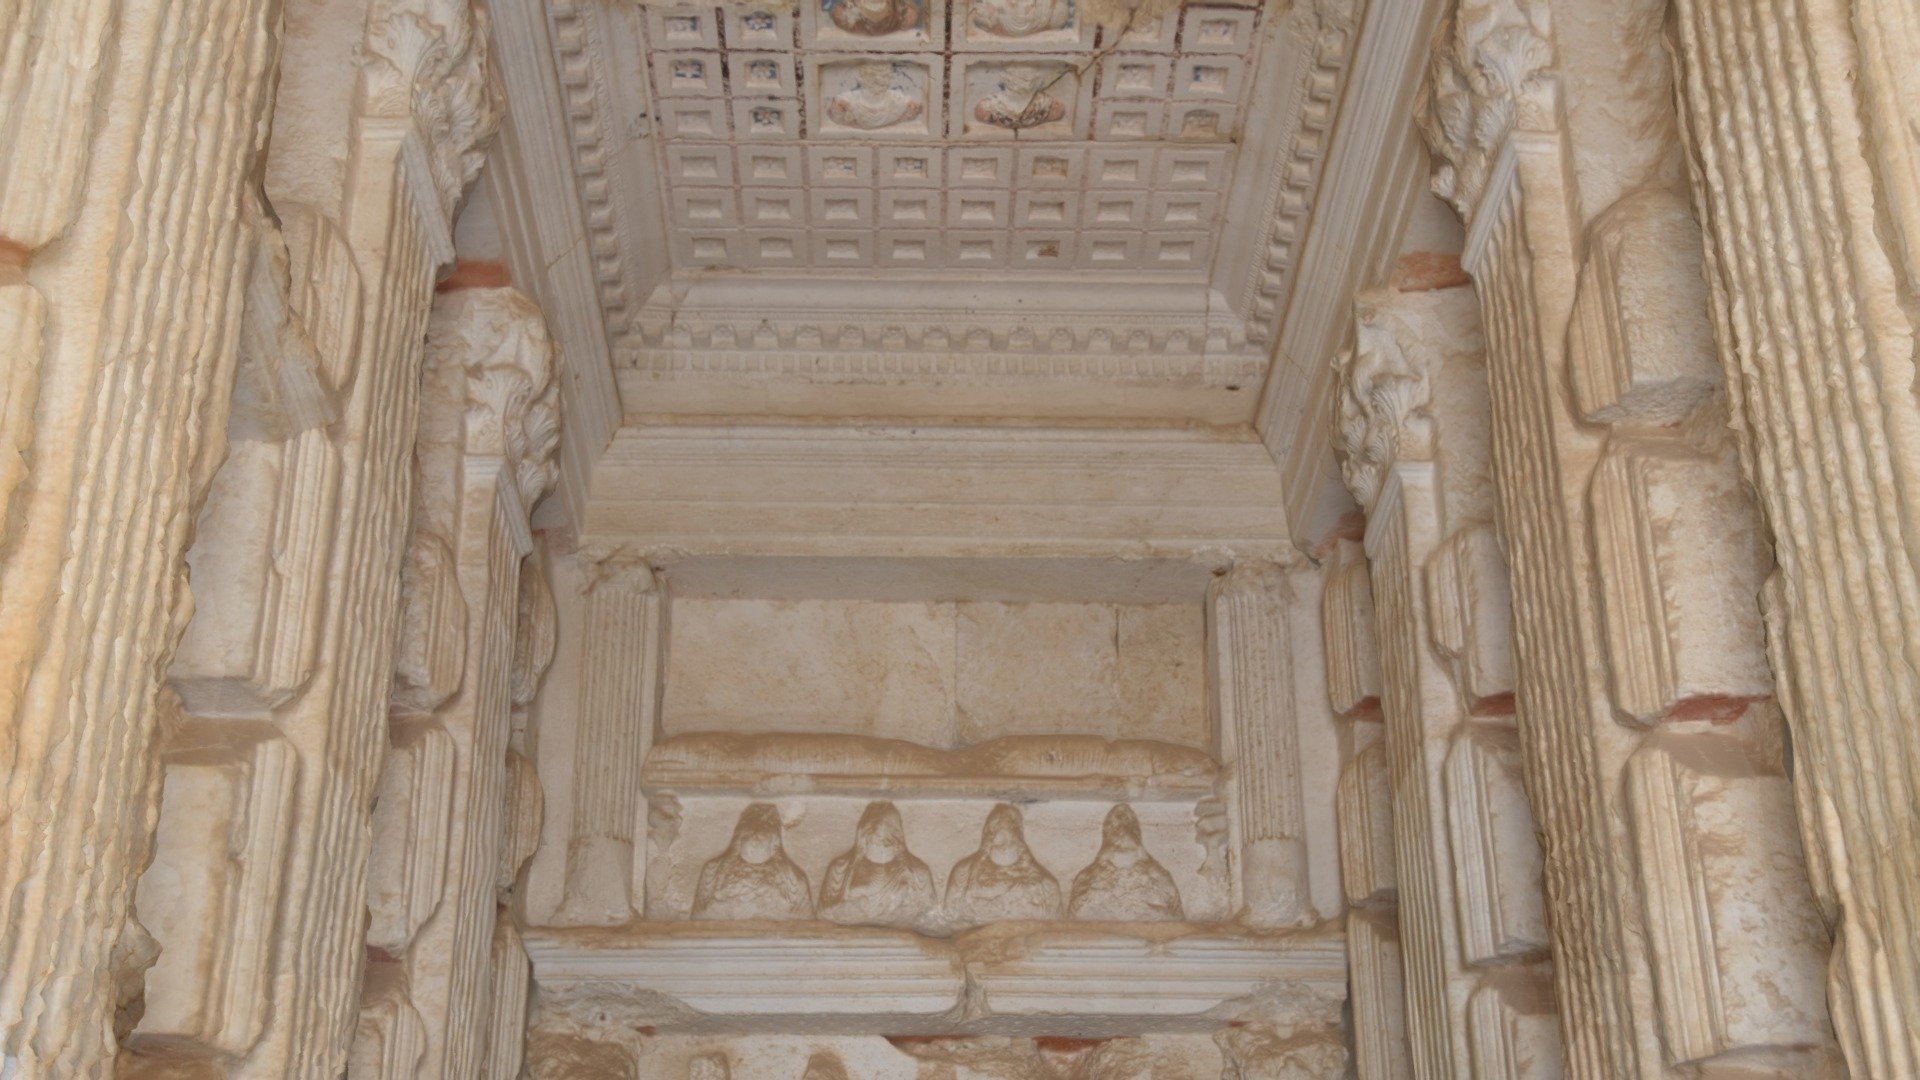 Tomb of Elahbel - Interior